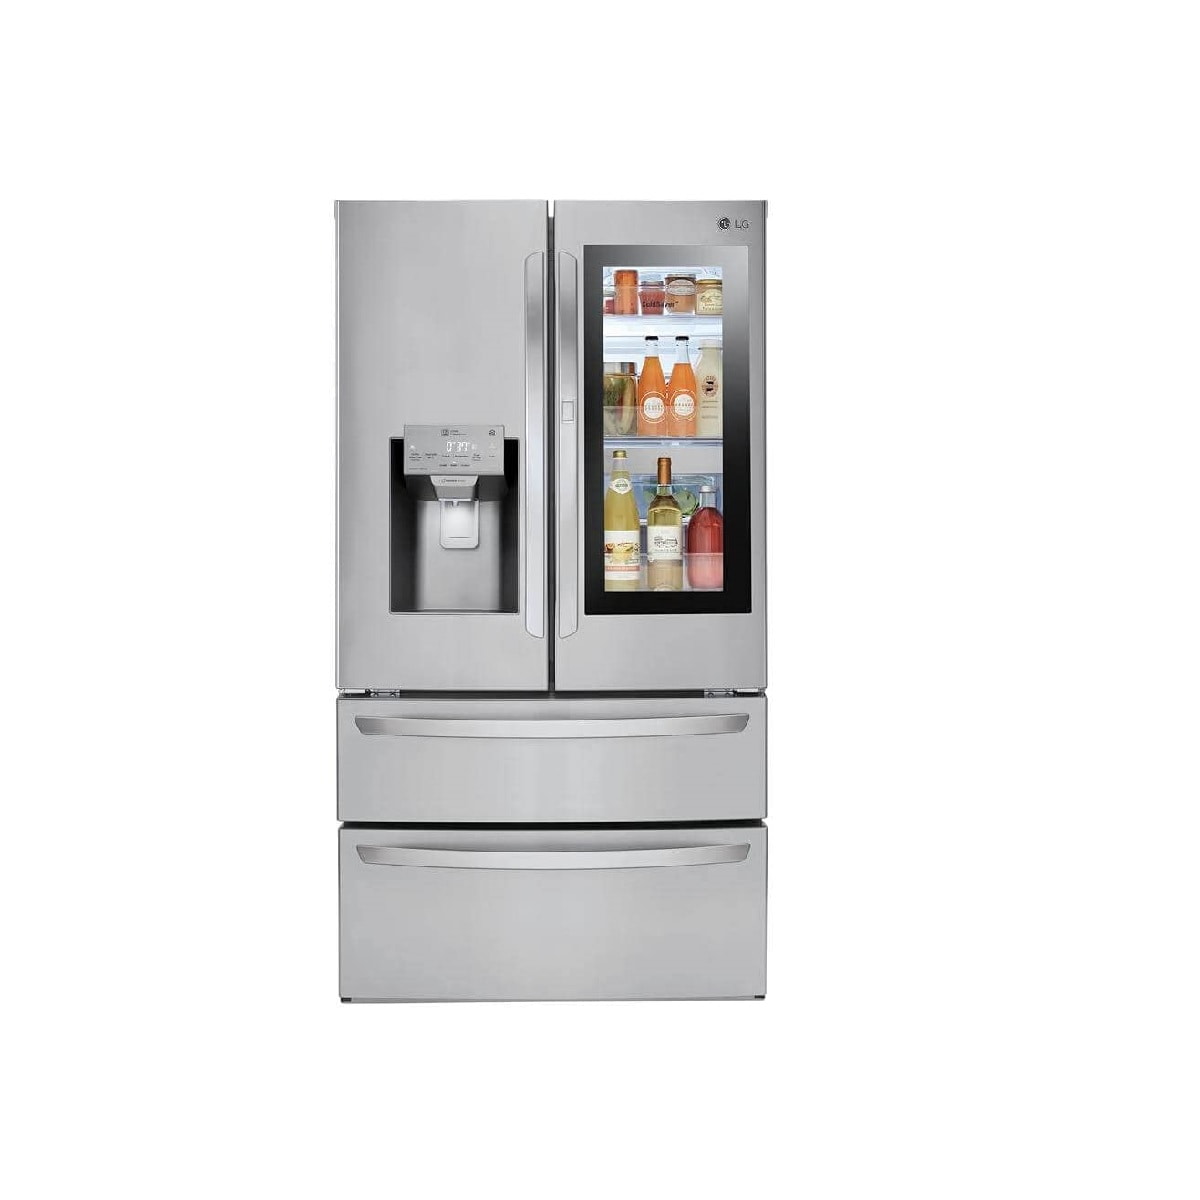 LG refrigerators bottom freezer problems